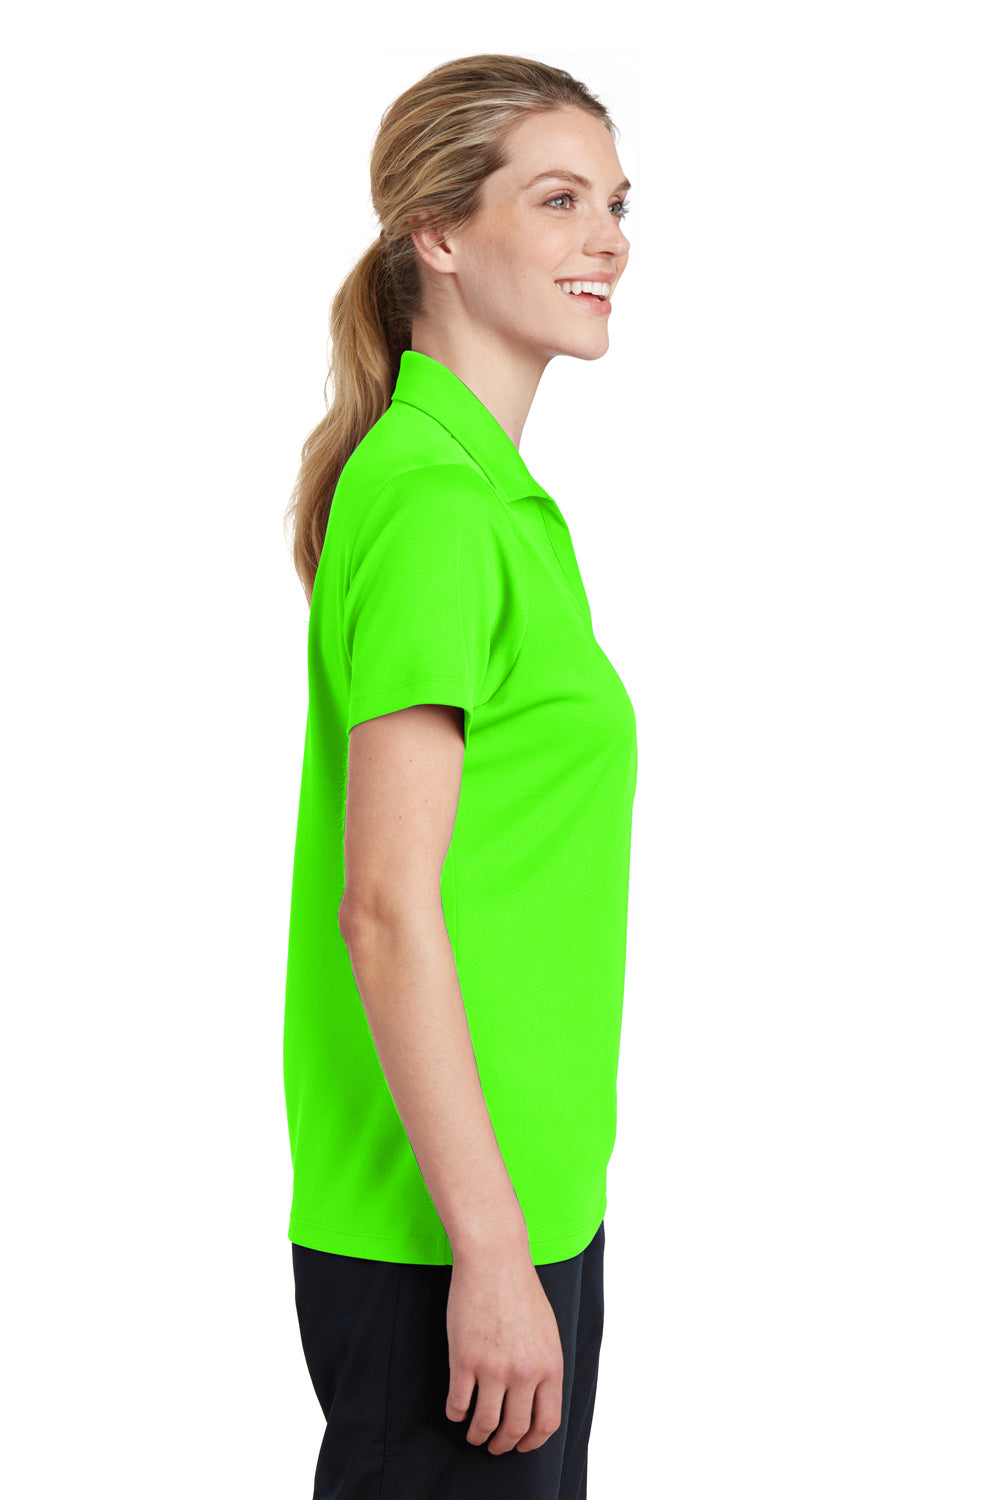 Buy Cool Shirts Women's High Visibility Moisture-Wicking Polo Shirt - Neon Green, XL